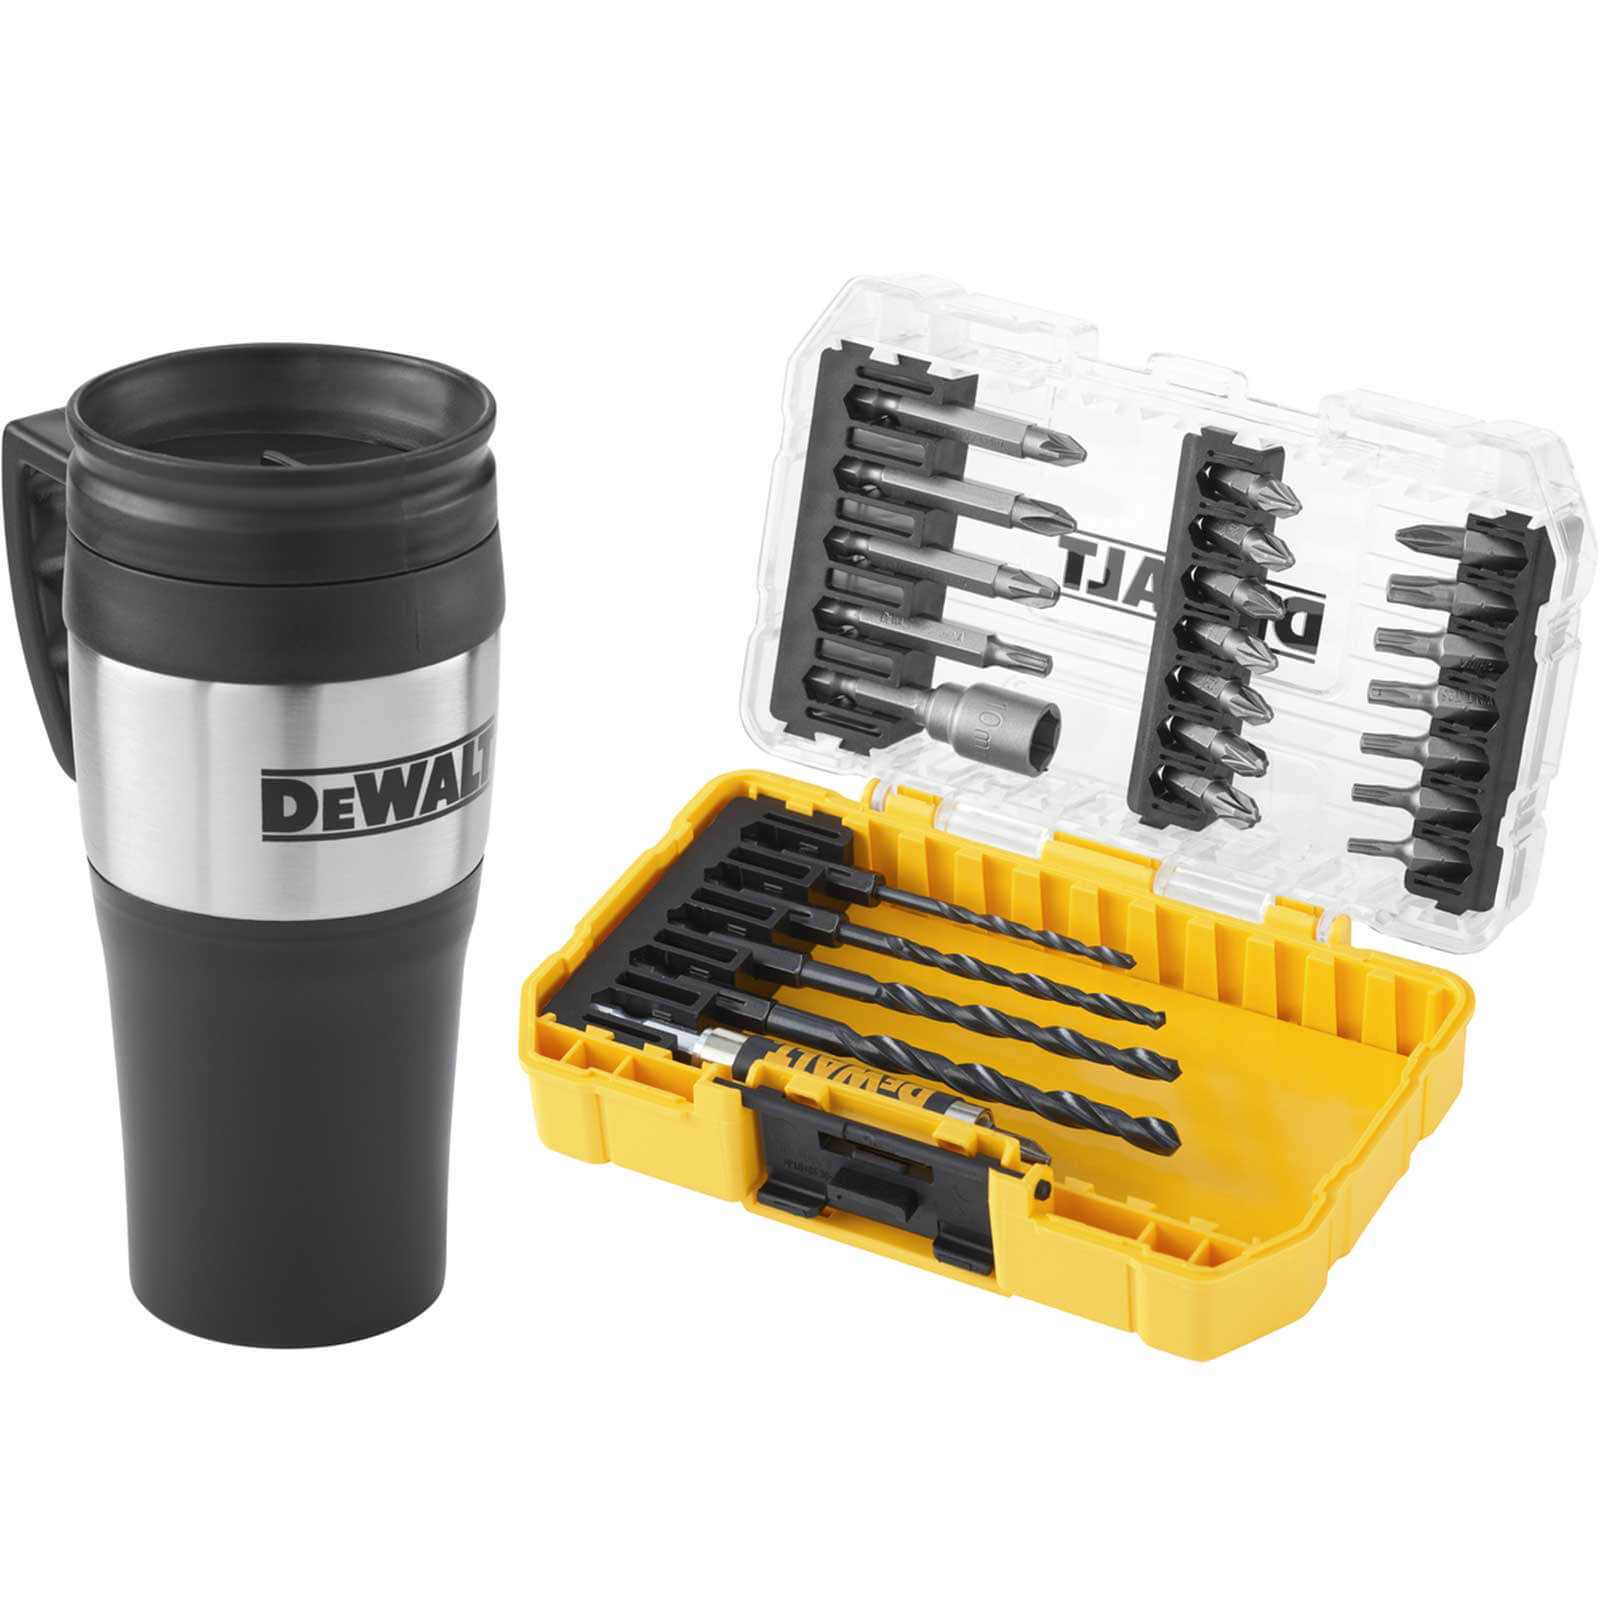 Image of DeWalt 25 Piece Hex Shank Drill and Screwdriver Bit Set / Mug in Tough Case